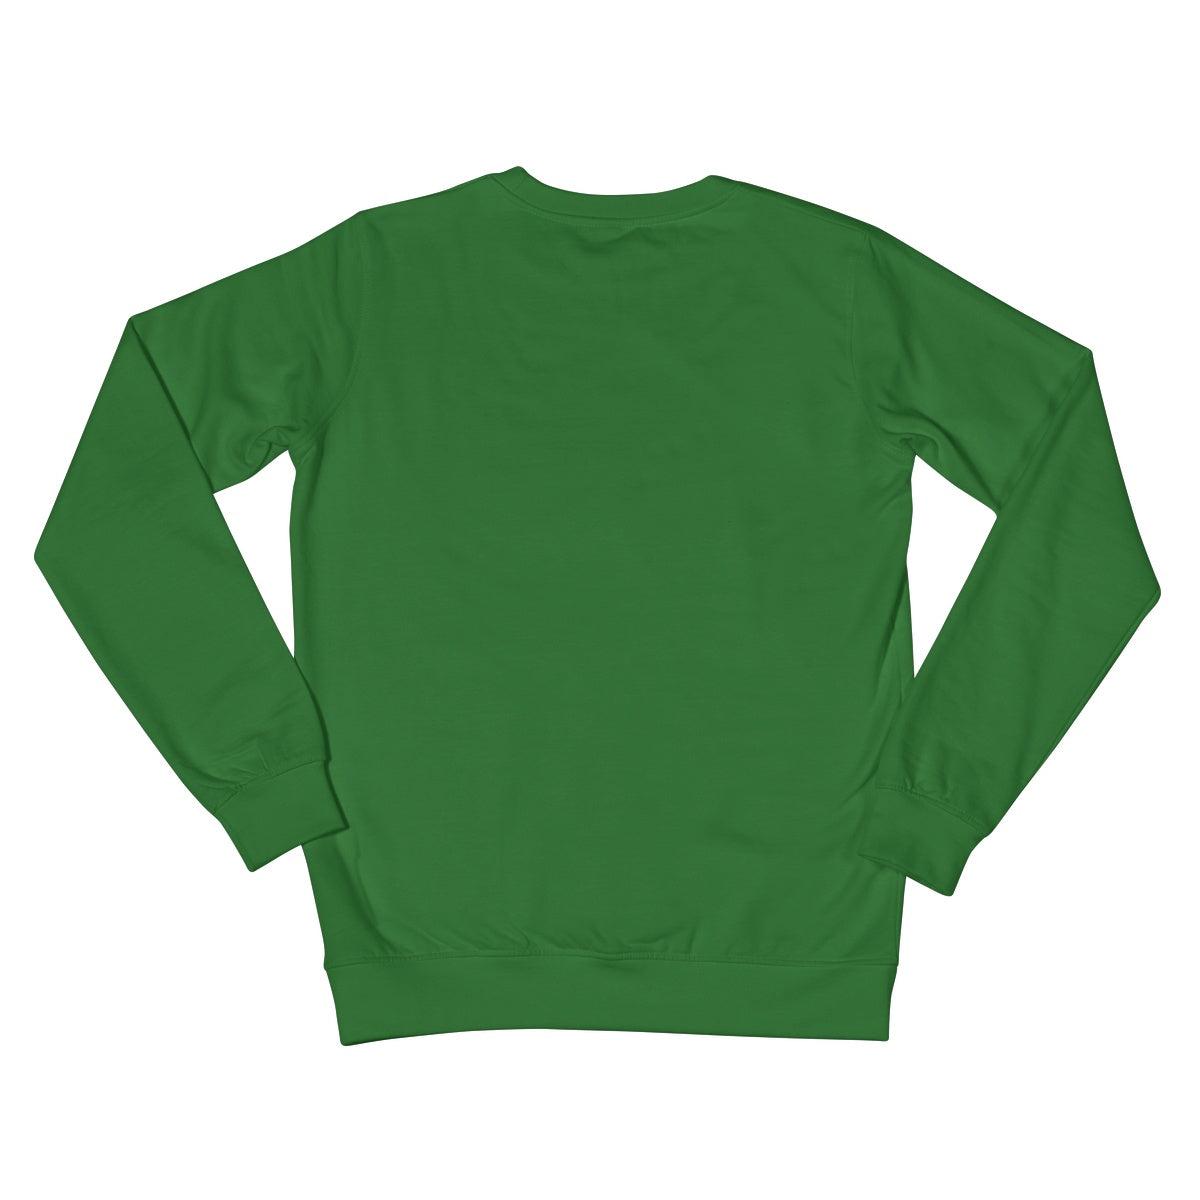 Celtic Woven Design Crew Neck Sweatshirt